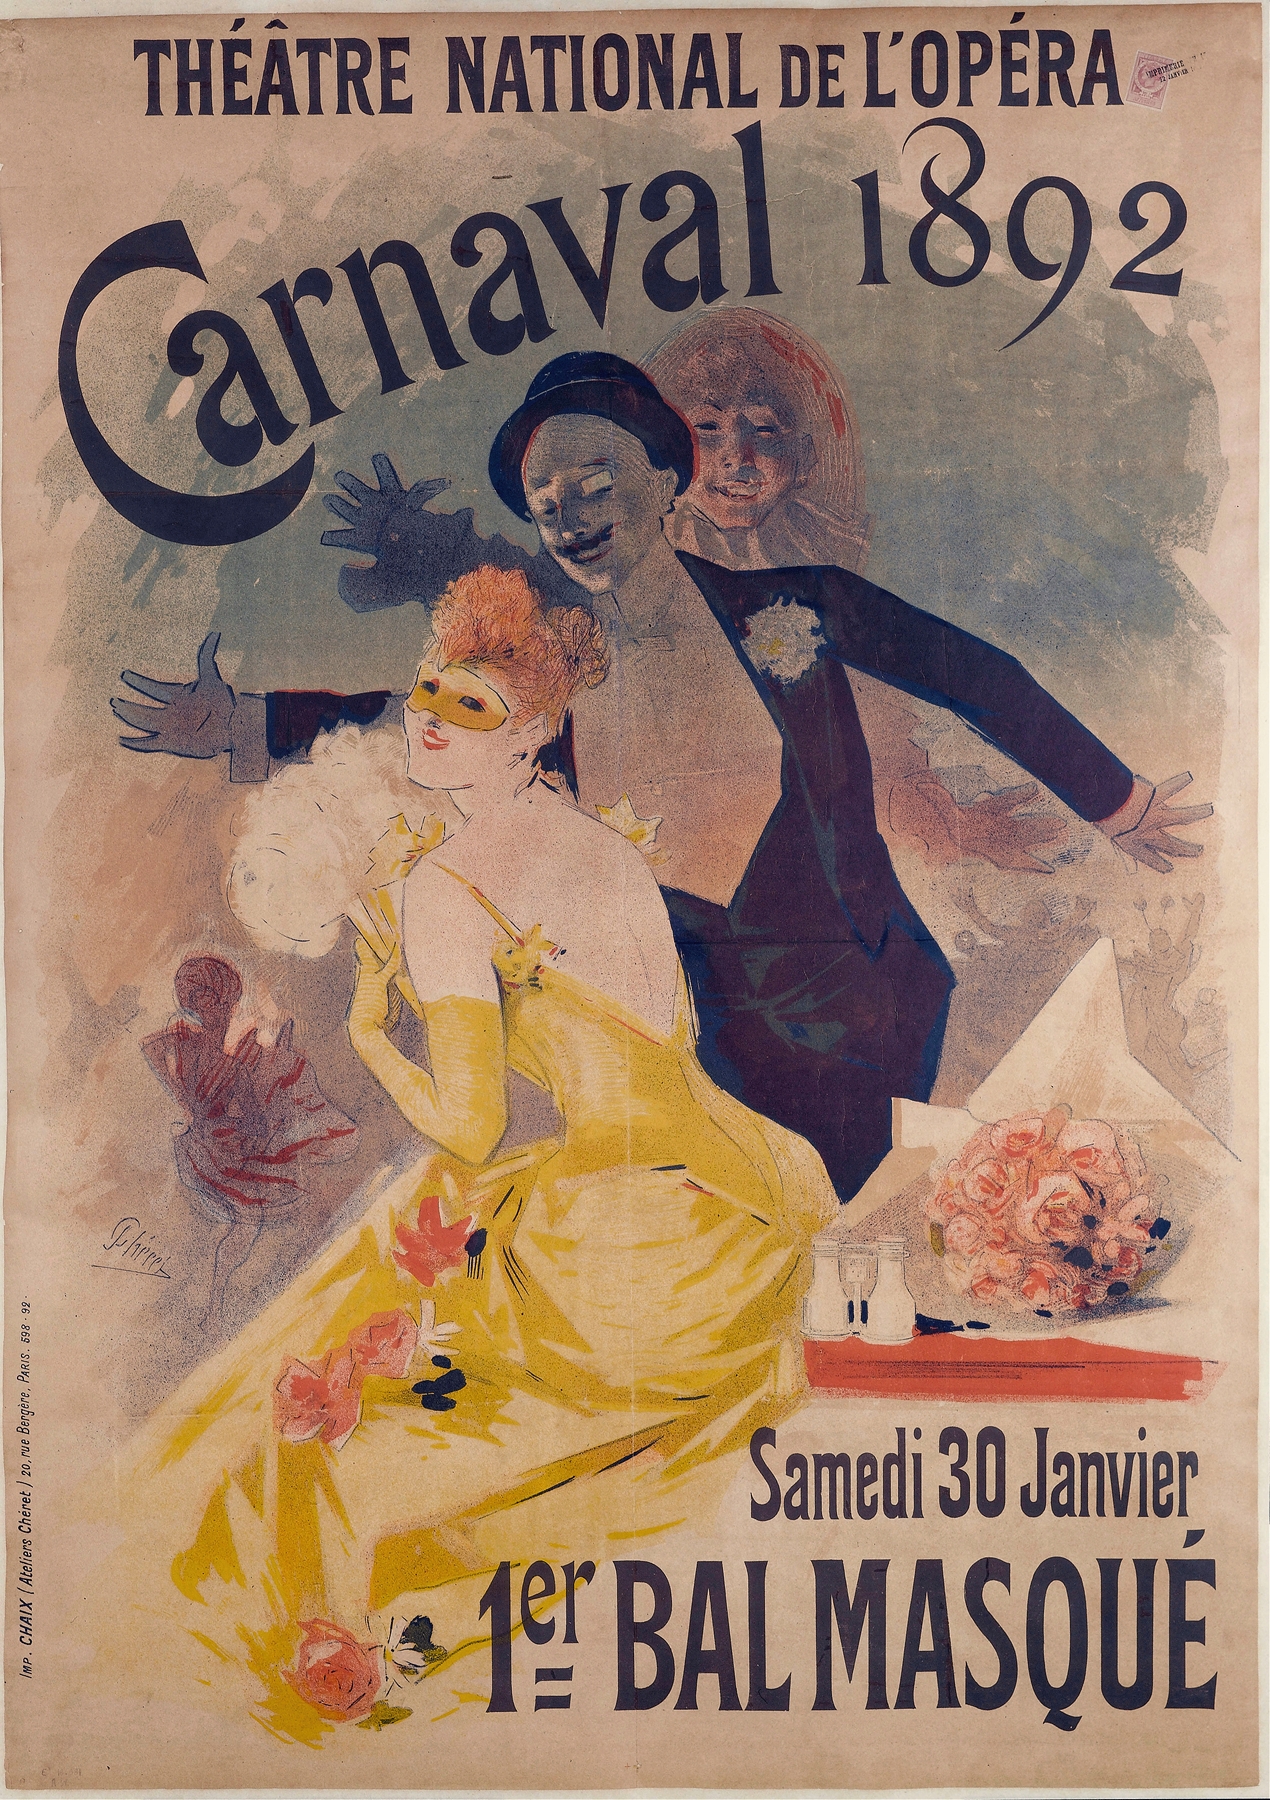 Theatre National De L’opera Carnaval 1892 썸네일